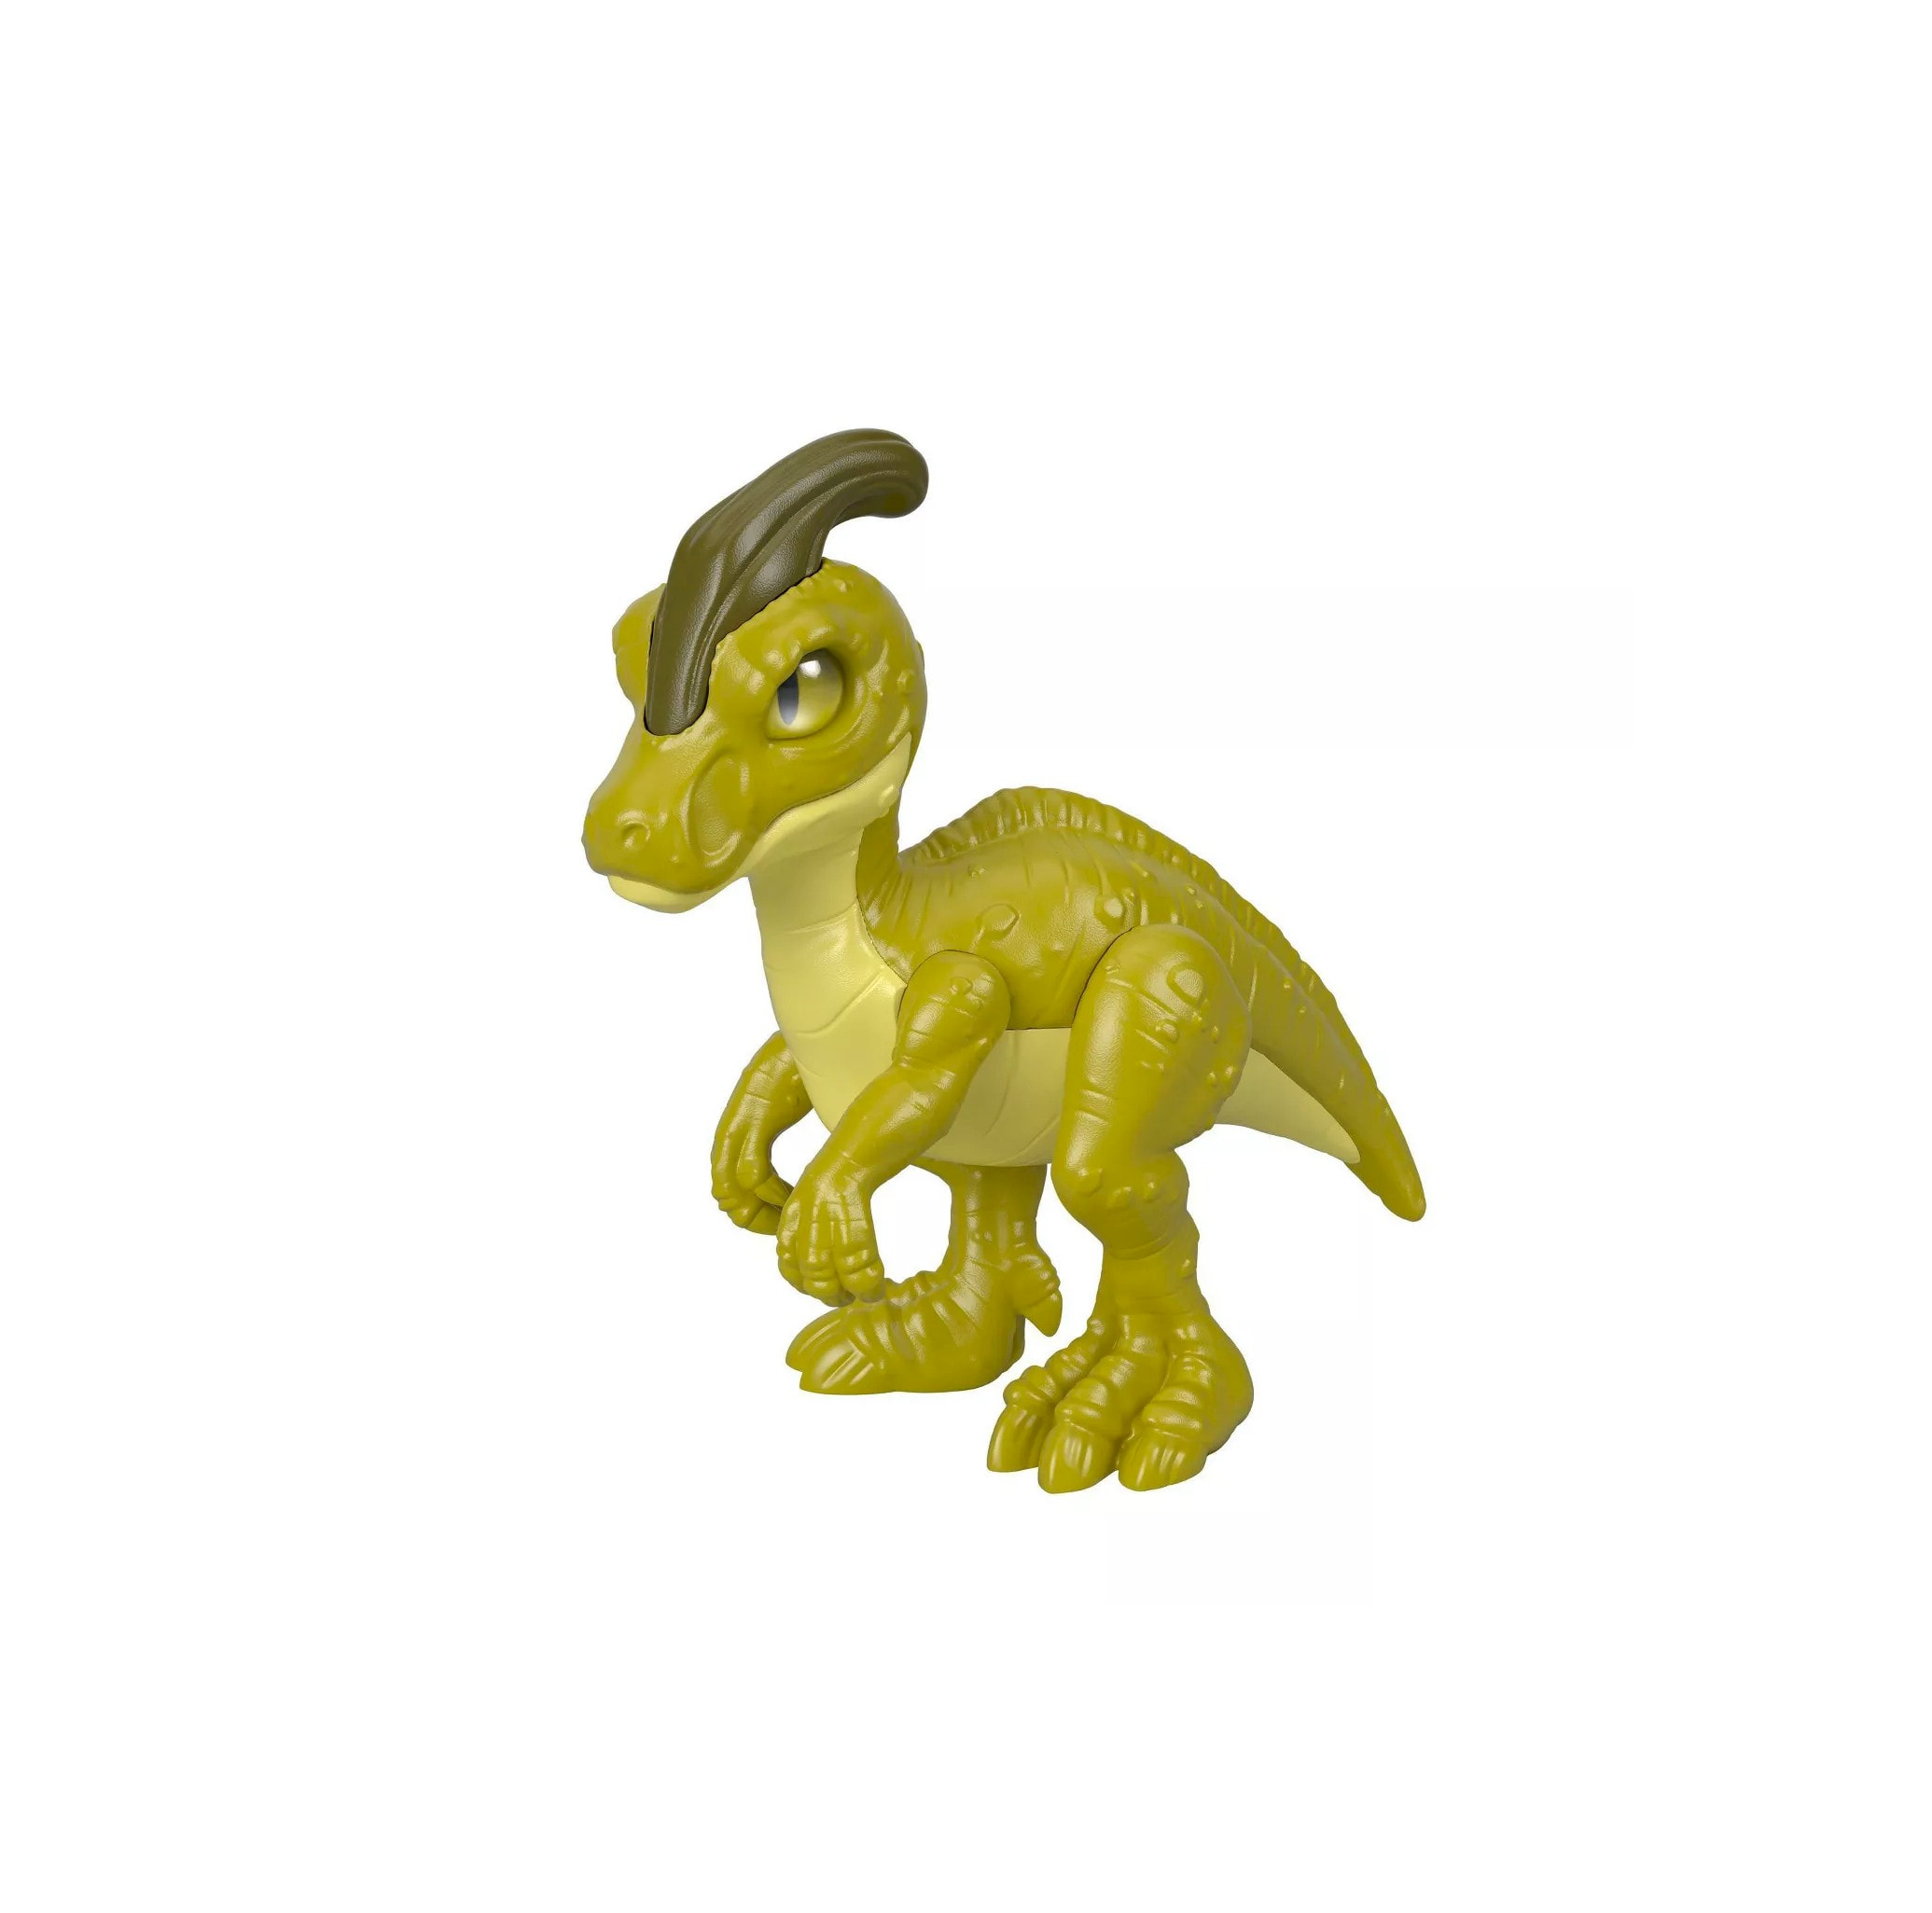 Fisher price Imaginext Jurassic World Dinosaur NEW Egg Stygimoloch bone head toy 